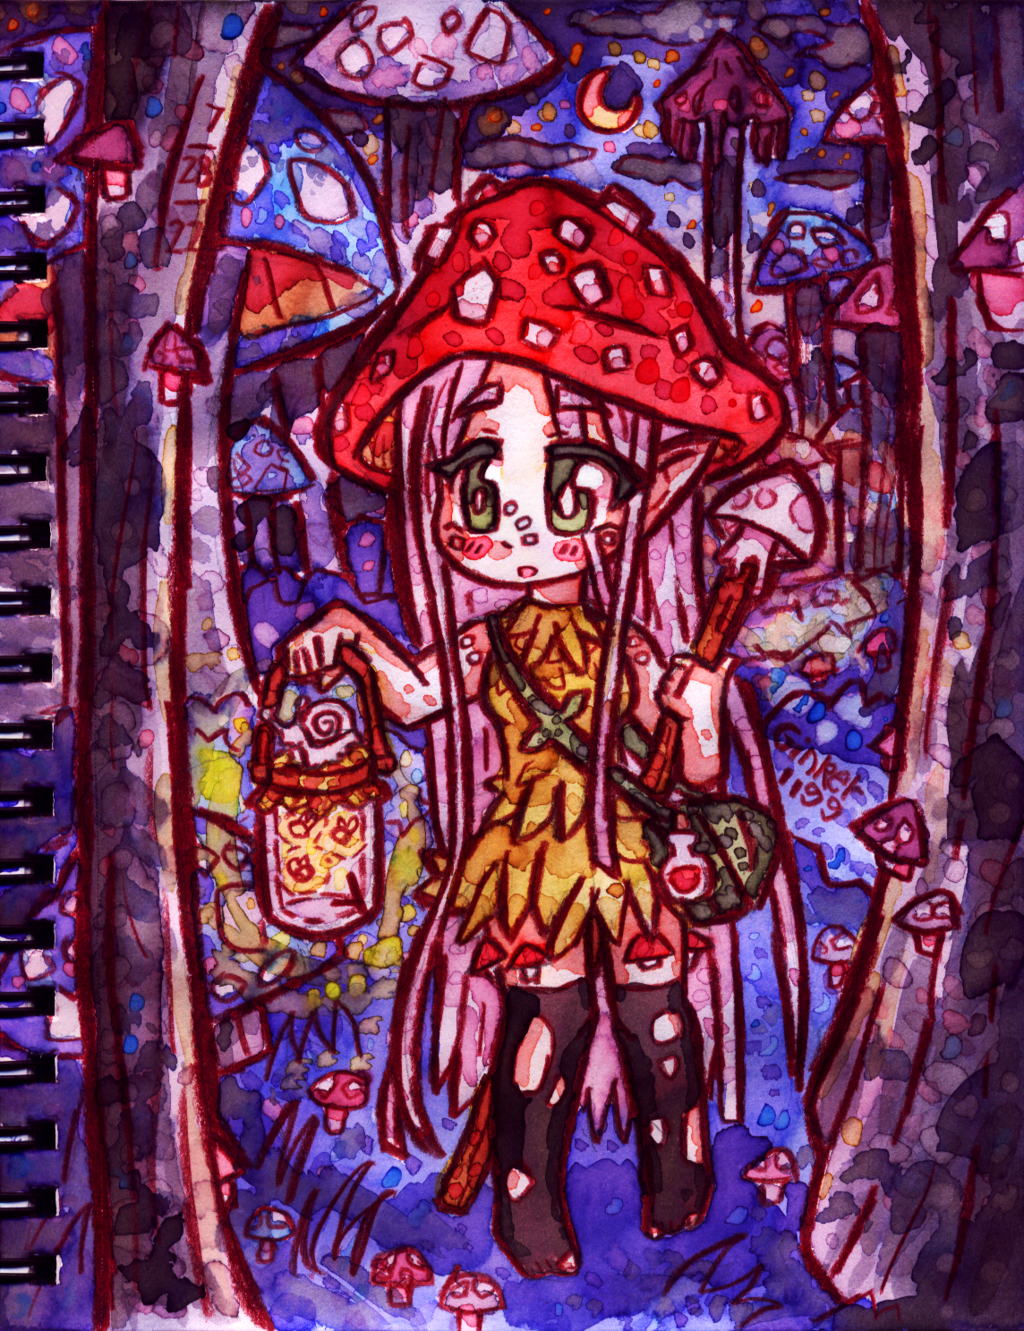 Most recent image: Art Fight ATK 04 | Noko explores a mushroom forest